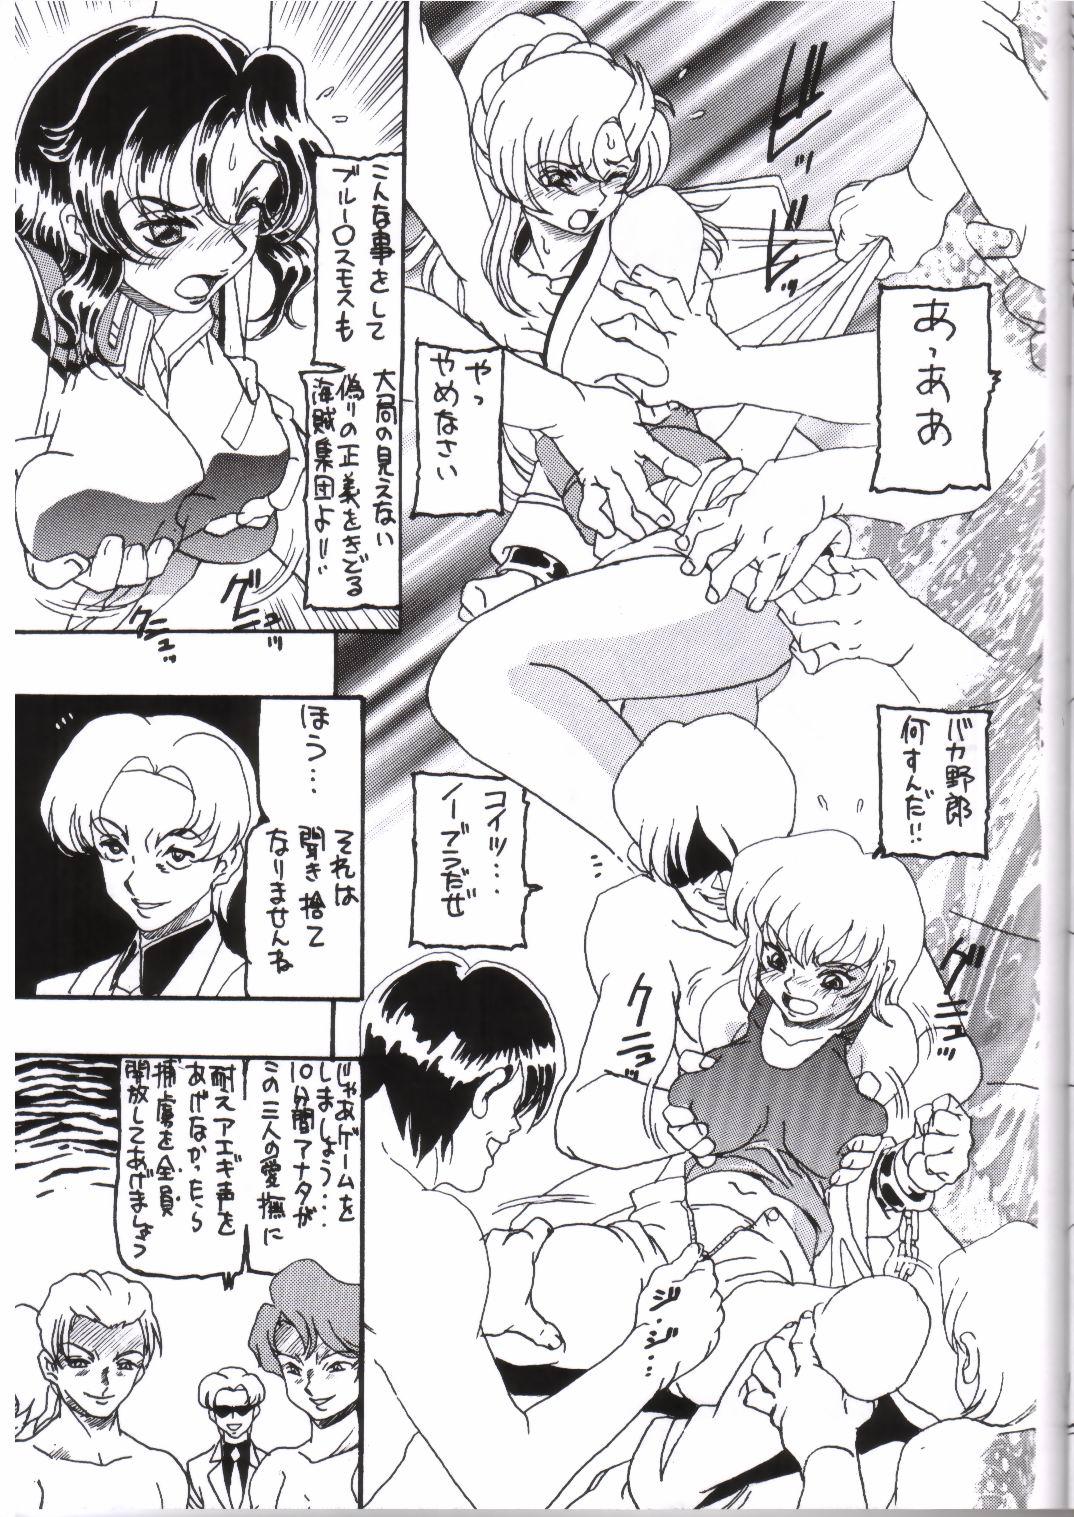 Blowjob Moon Shine 9 - Gundam seed 8teenxxx - Page 8